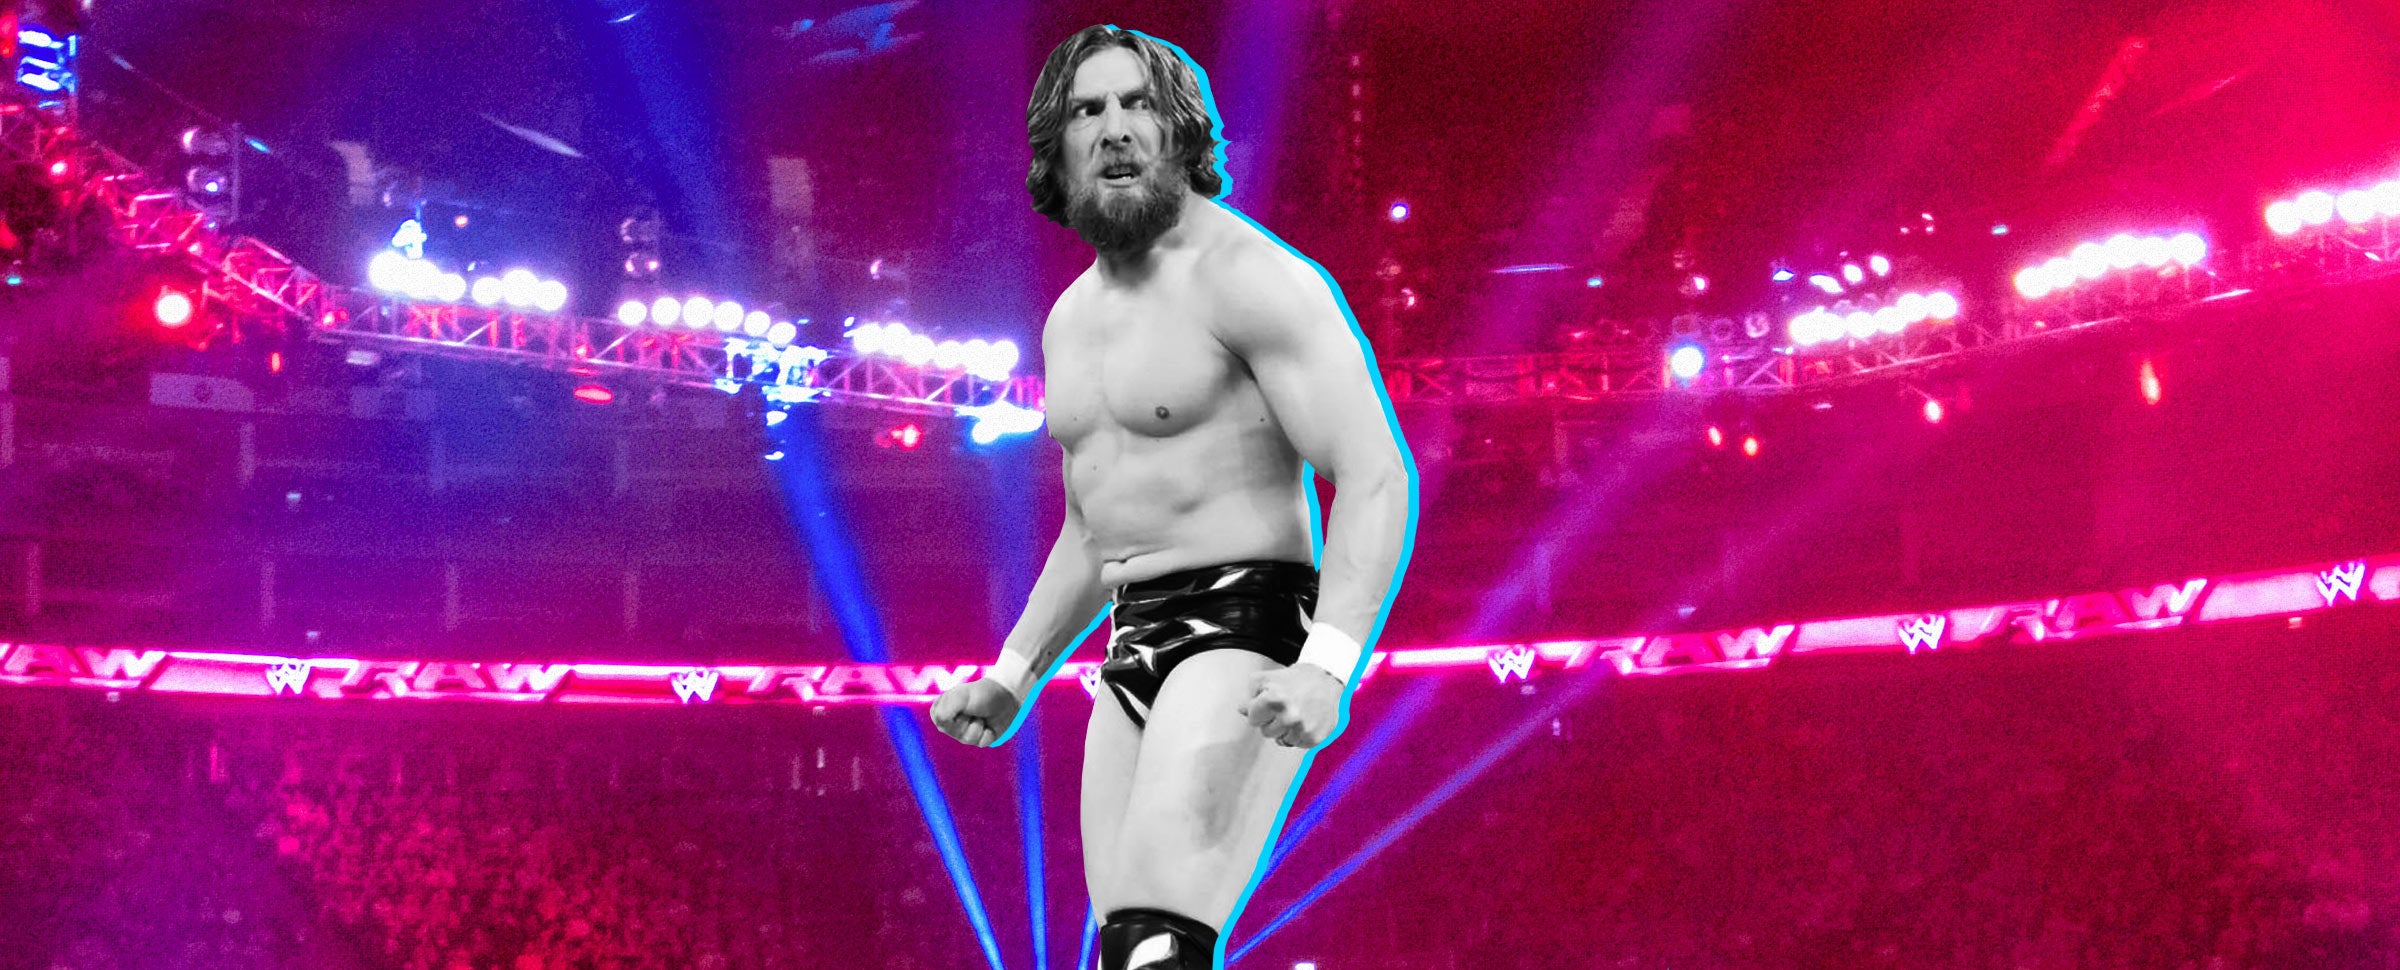 WWE SummerSlam 2019 Daniel Bryan vs Roman Reigns